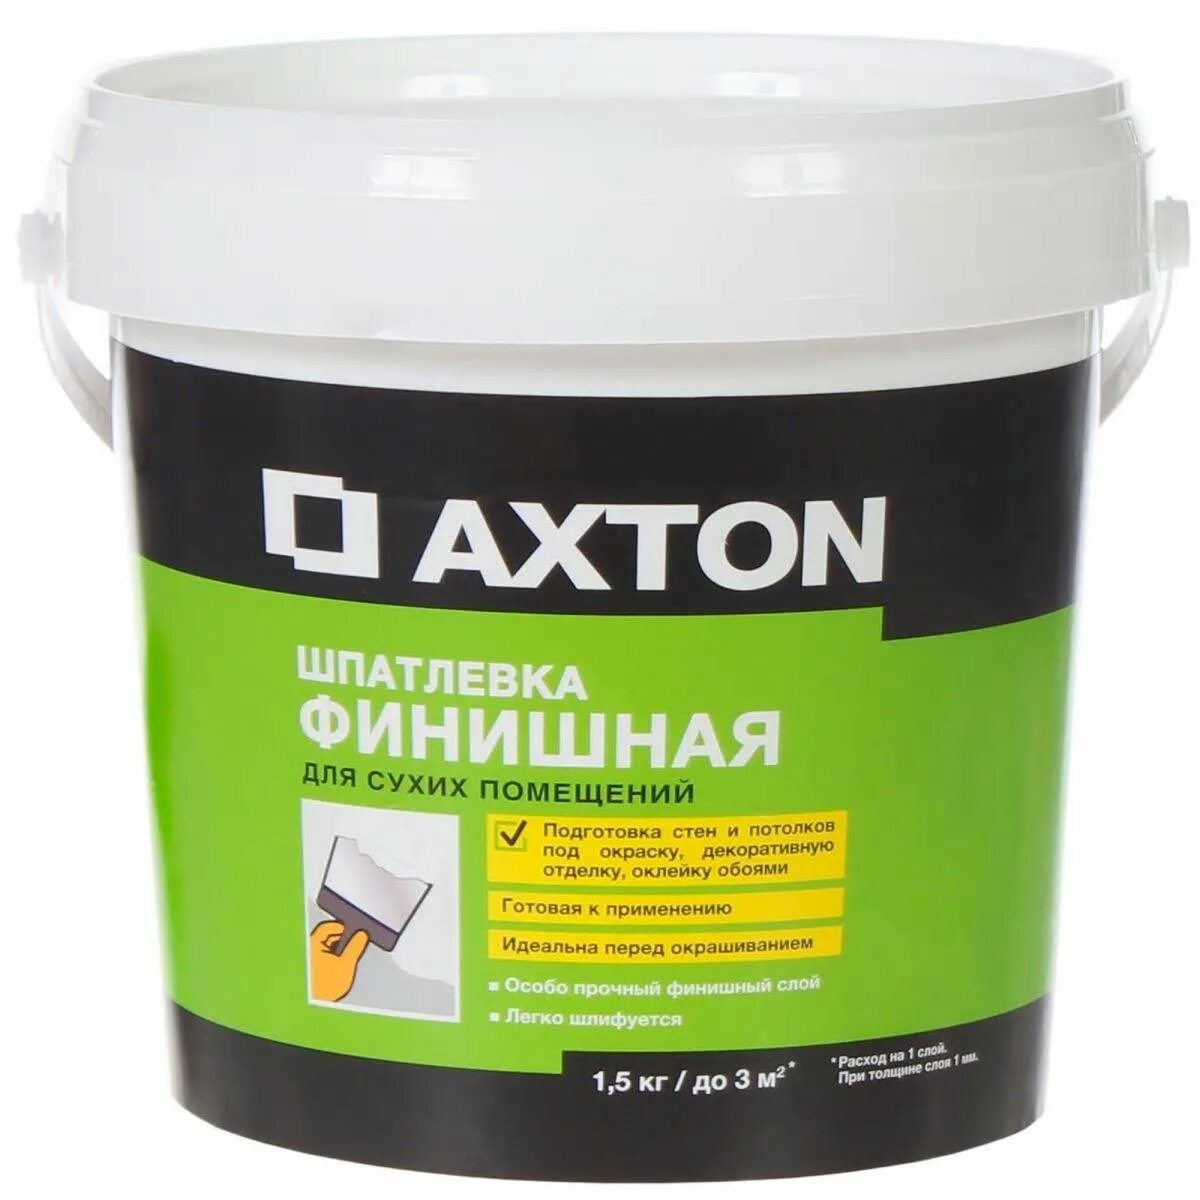 Axton шпатлёвка финишная для сухих помещений 1.5 кг. Axton шпатлевка финишная Leroy. Шпатлёвка финишная Axton для сухих помещений 5 кг. Шпатлевка Леруа Axton. Шпаклевка готовая цены